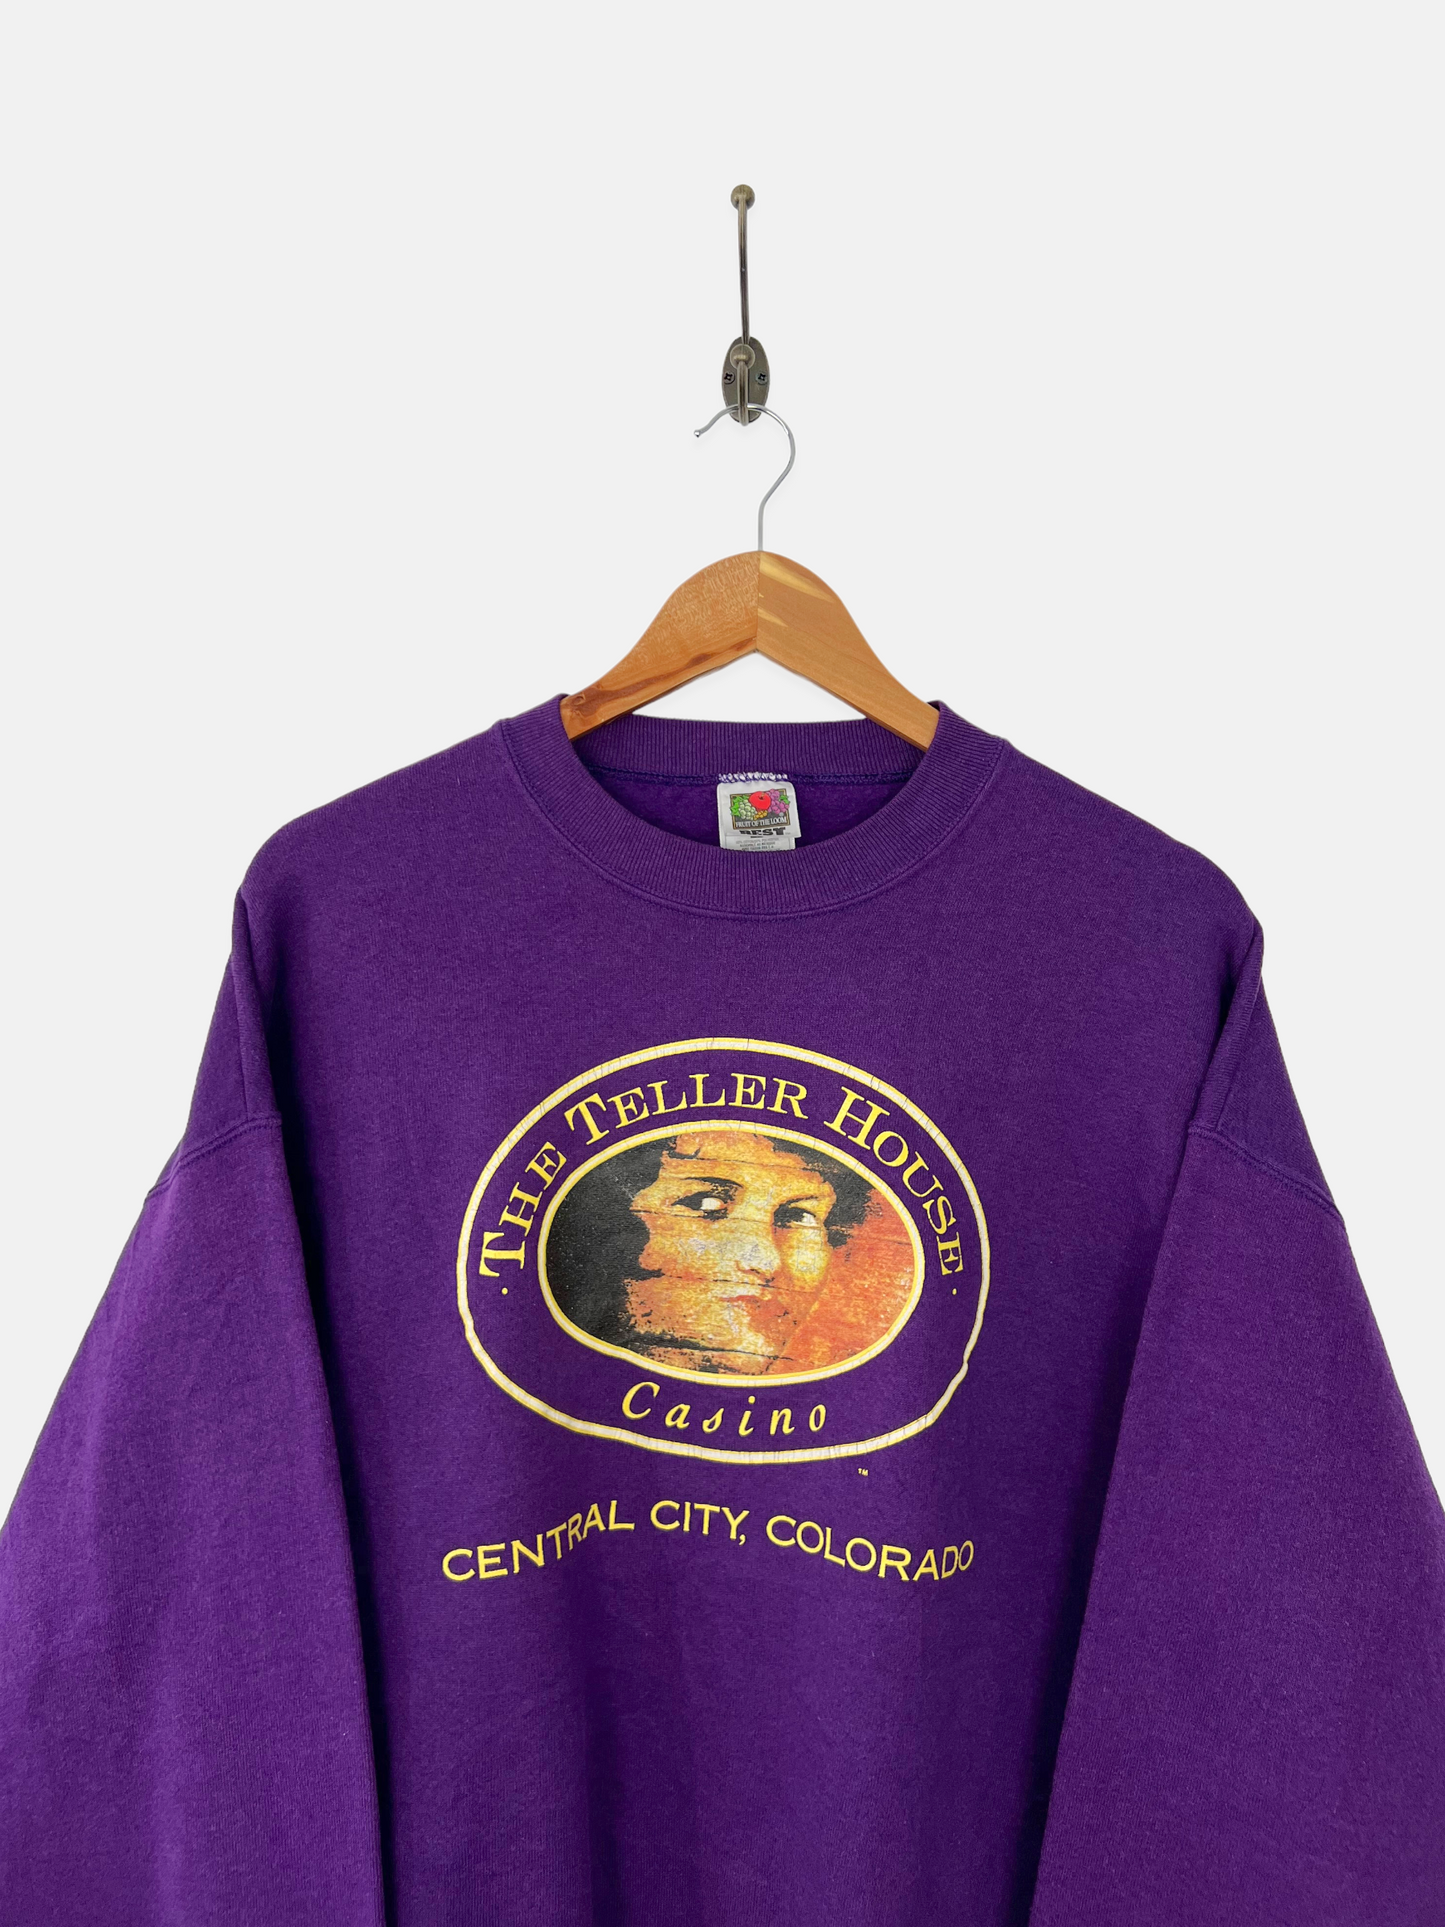 90's The Teller House Casino Colorado Vintage Sweatshirt Size M-L